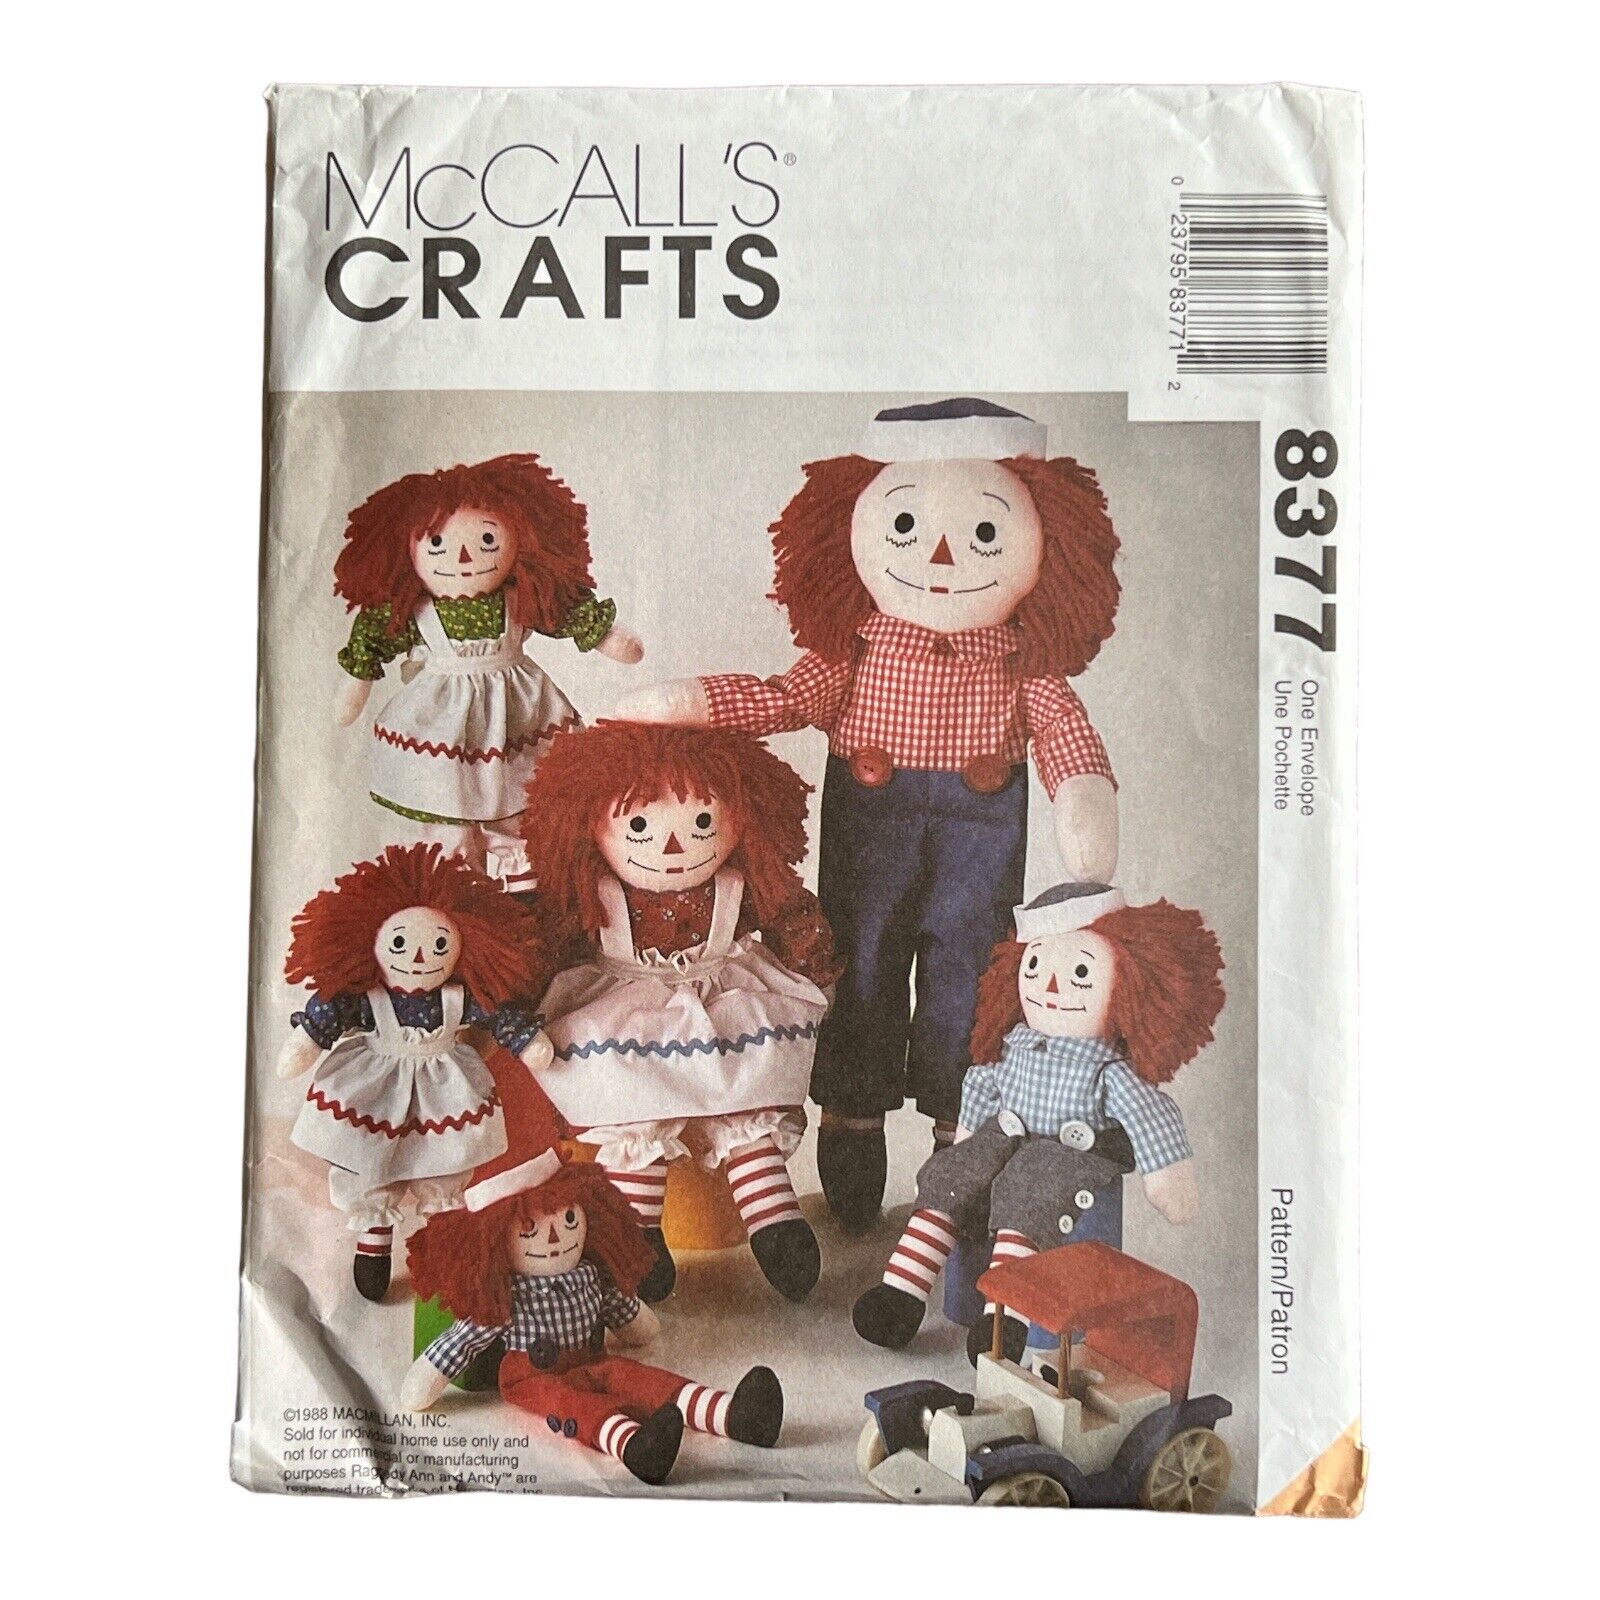 McCalls Crafts Uncut Sewing Pattern 8377 1988 Vintage